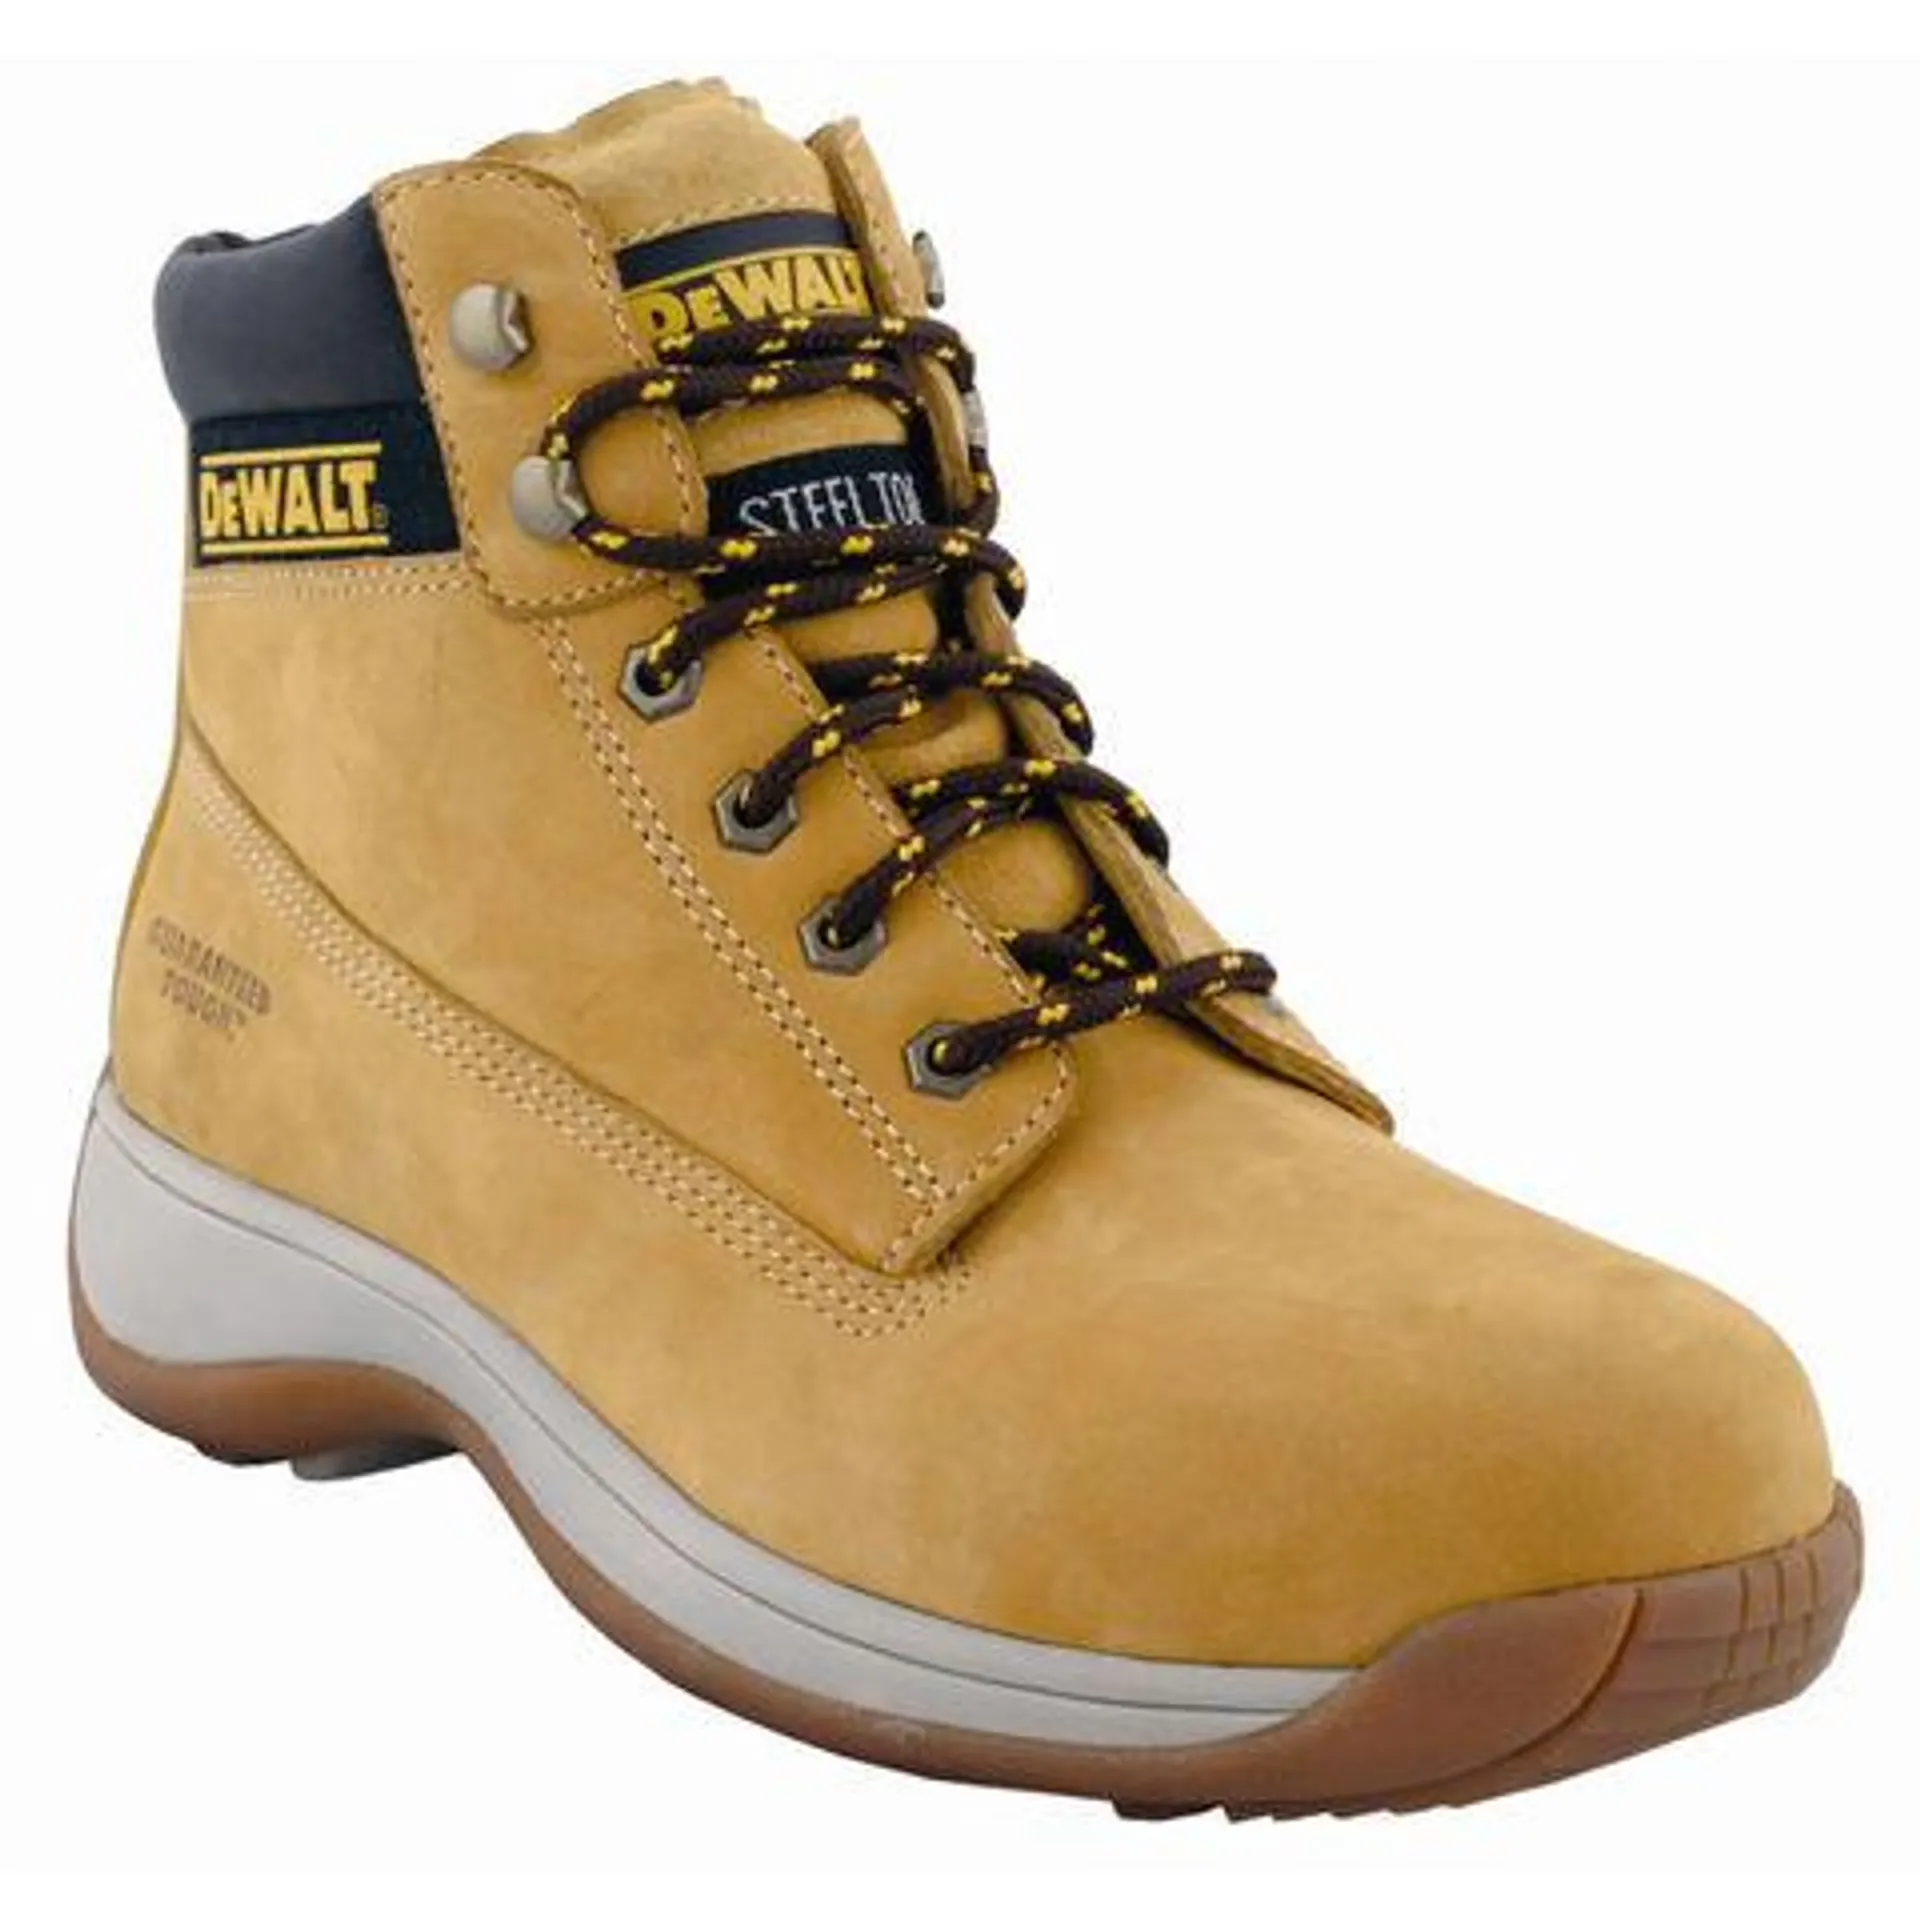 DeWalt Apprentice Safety Boots Tan